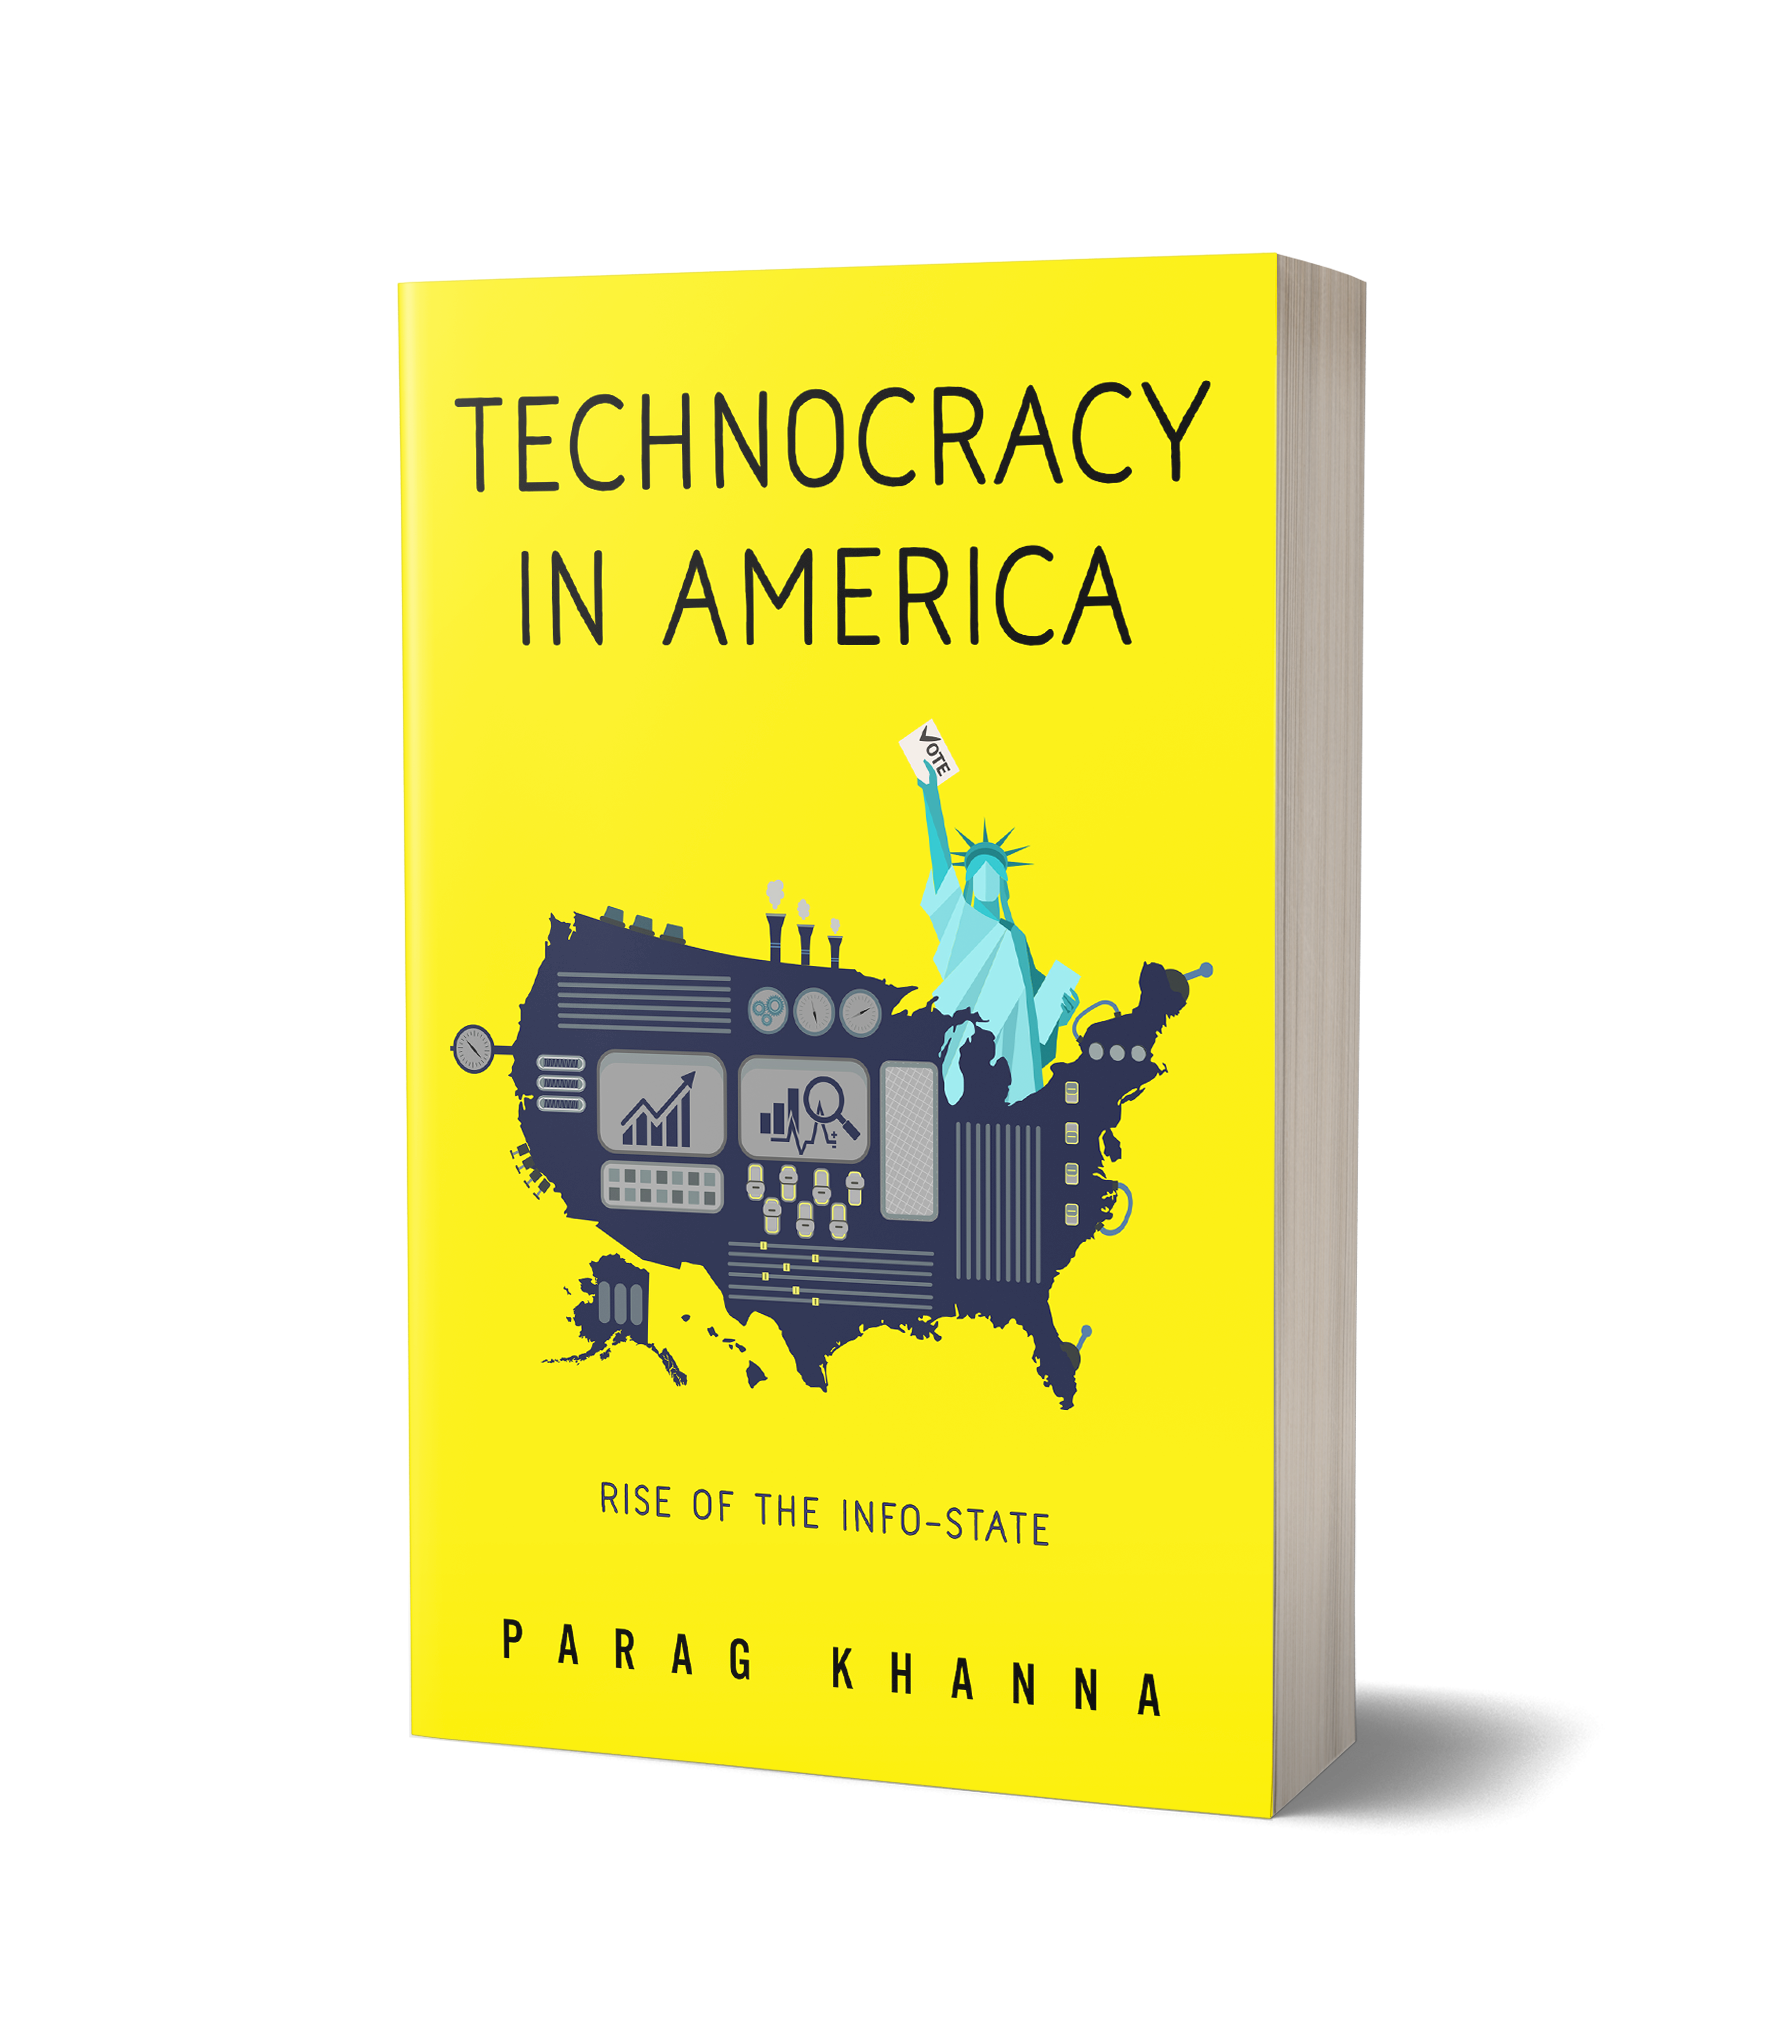 Parag Khanna returns to talk Technocracy!